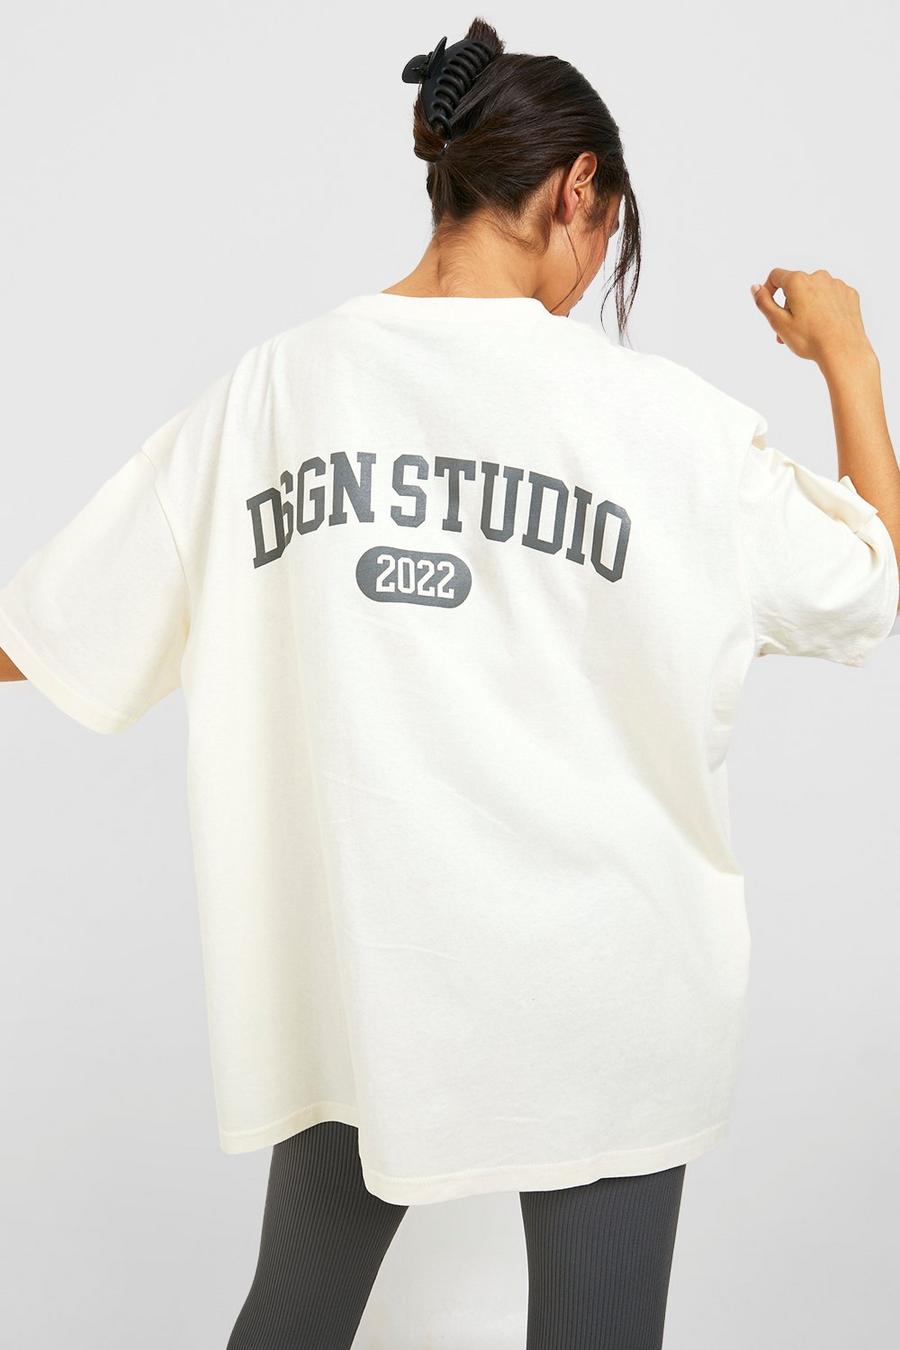 Oversize T-Shirt mit Dsgn Studio Print, Ecru